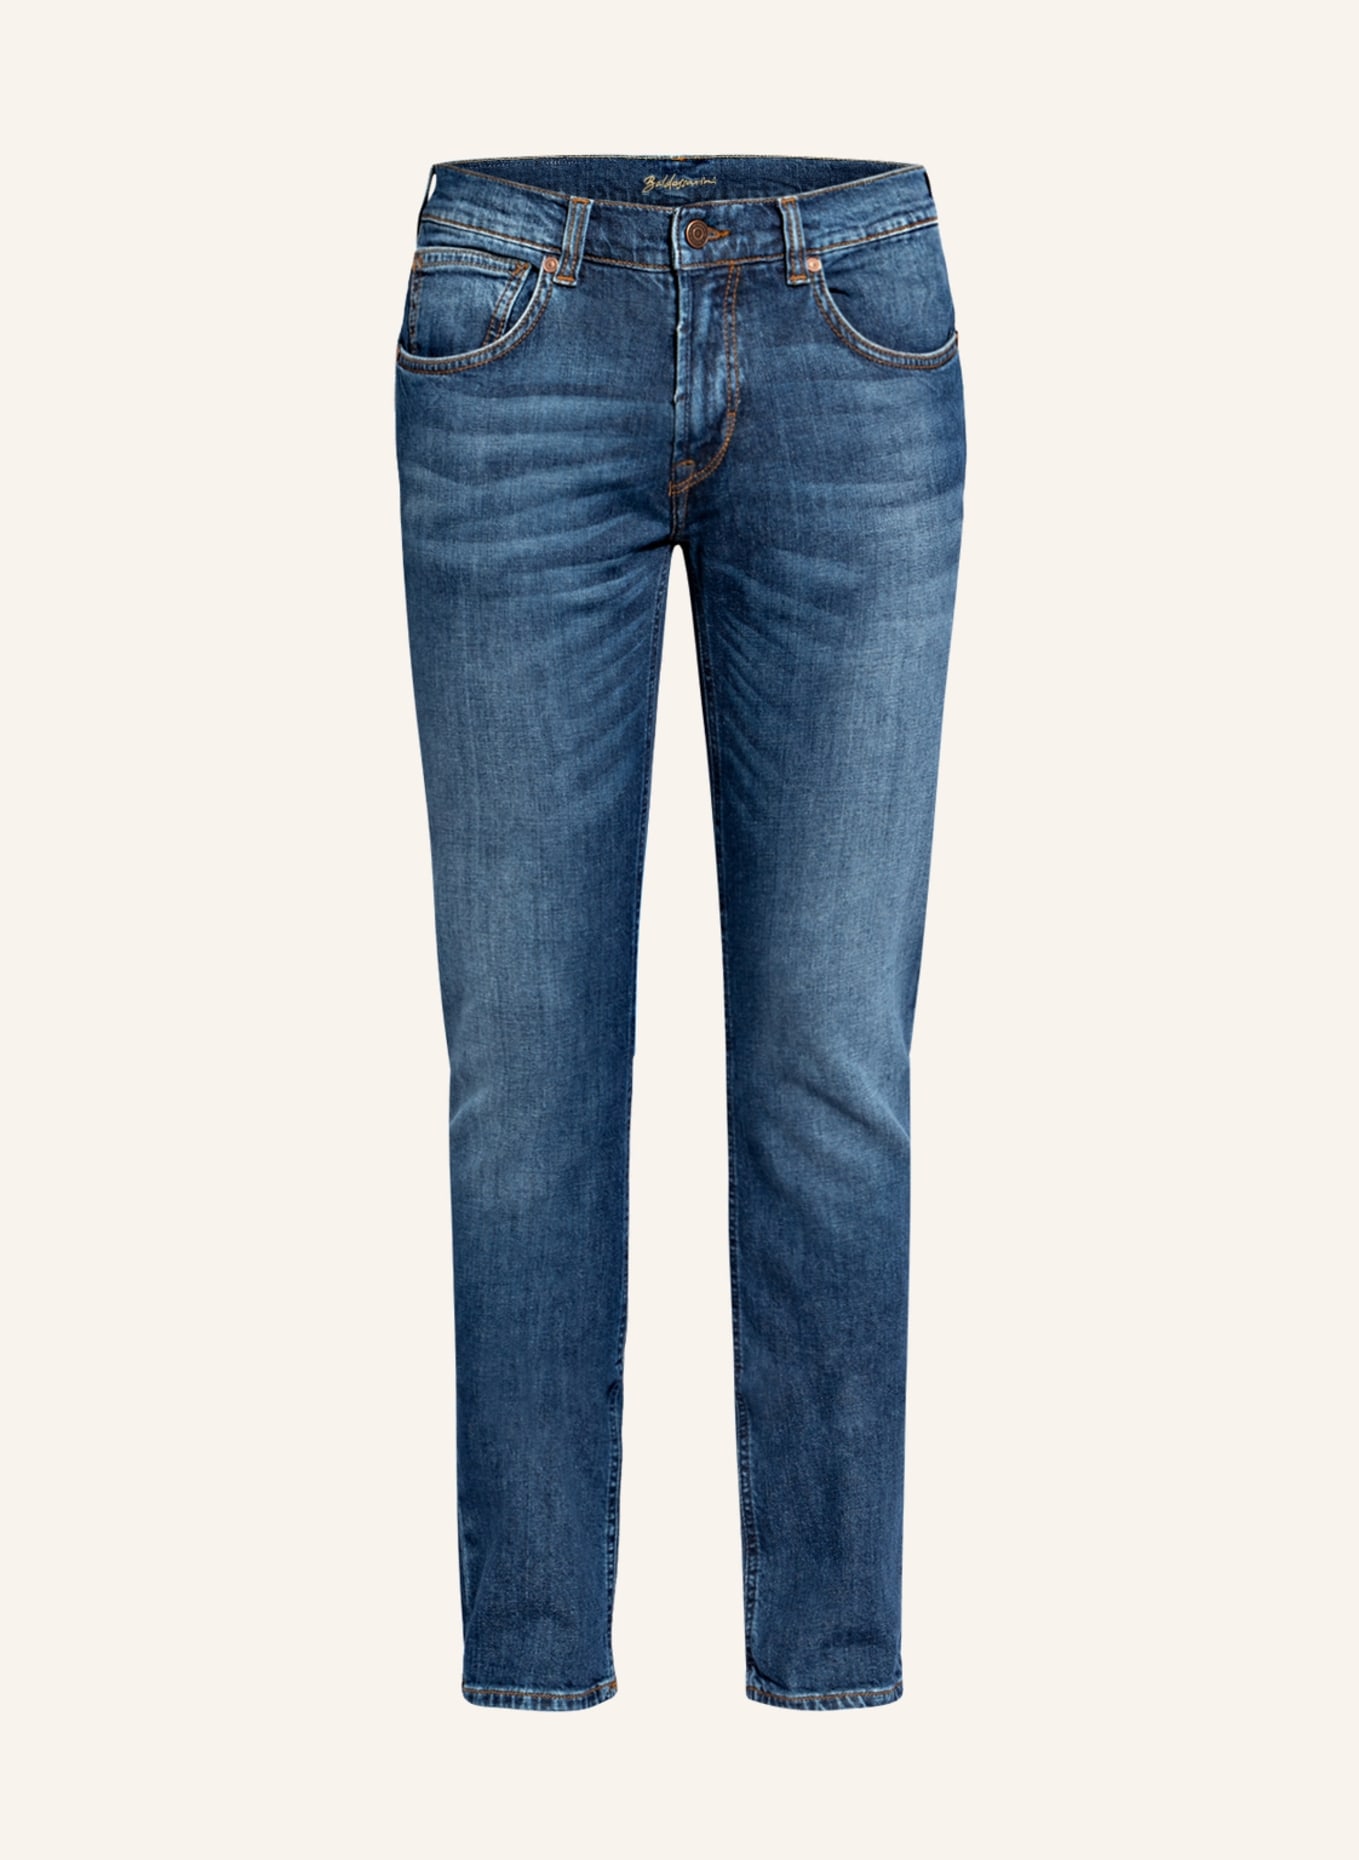 BALDESSARINI Jeans Slim Fit, Farbe: 6824 BLUE (Bild 1)